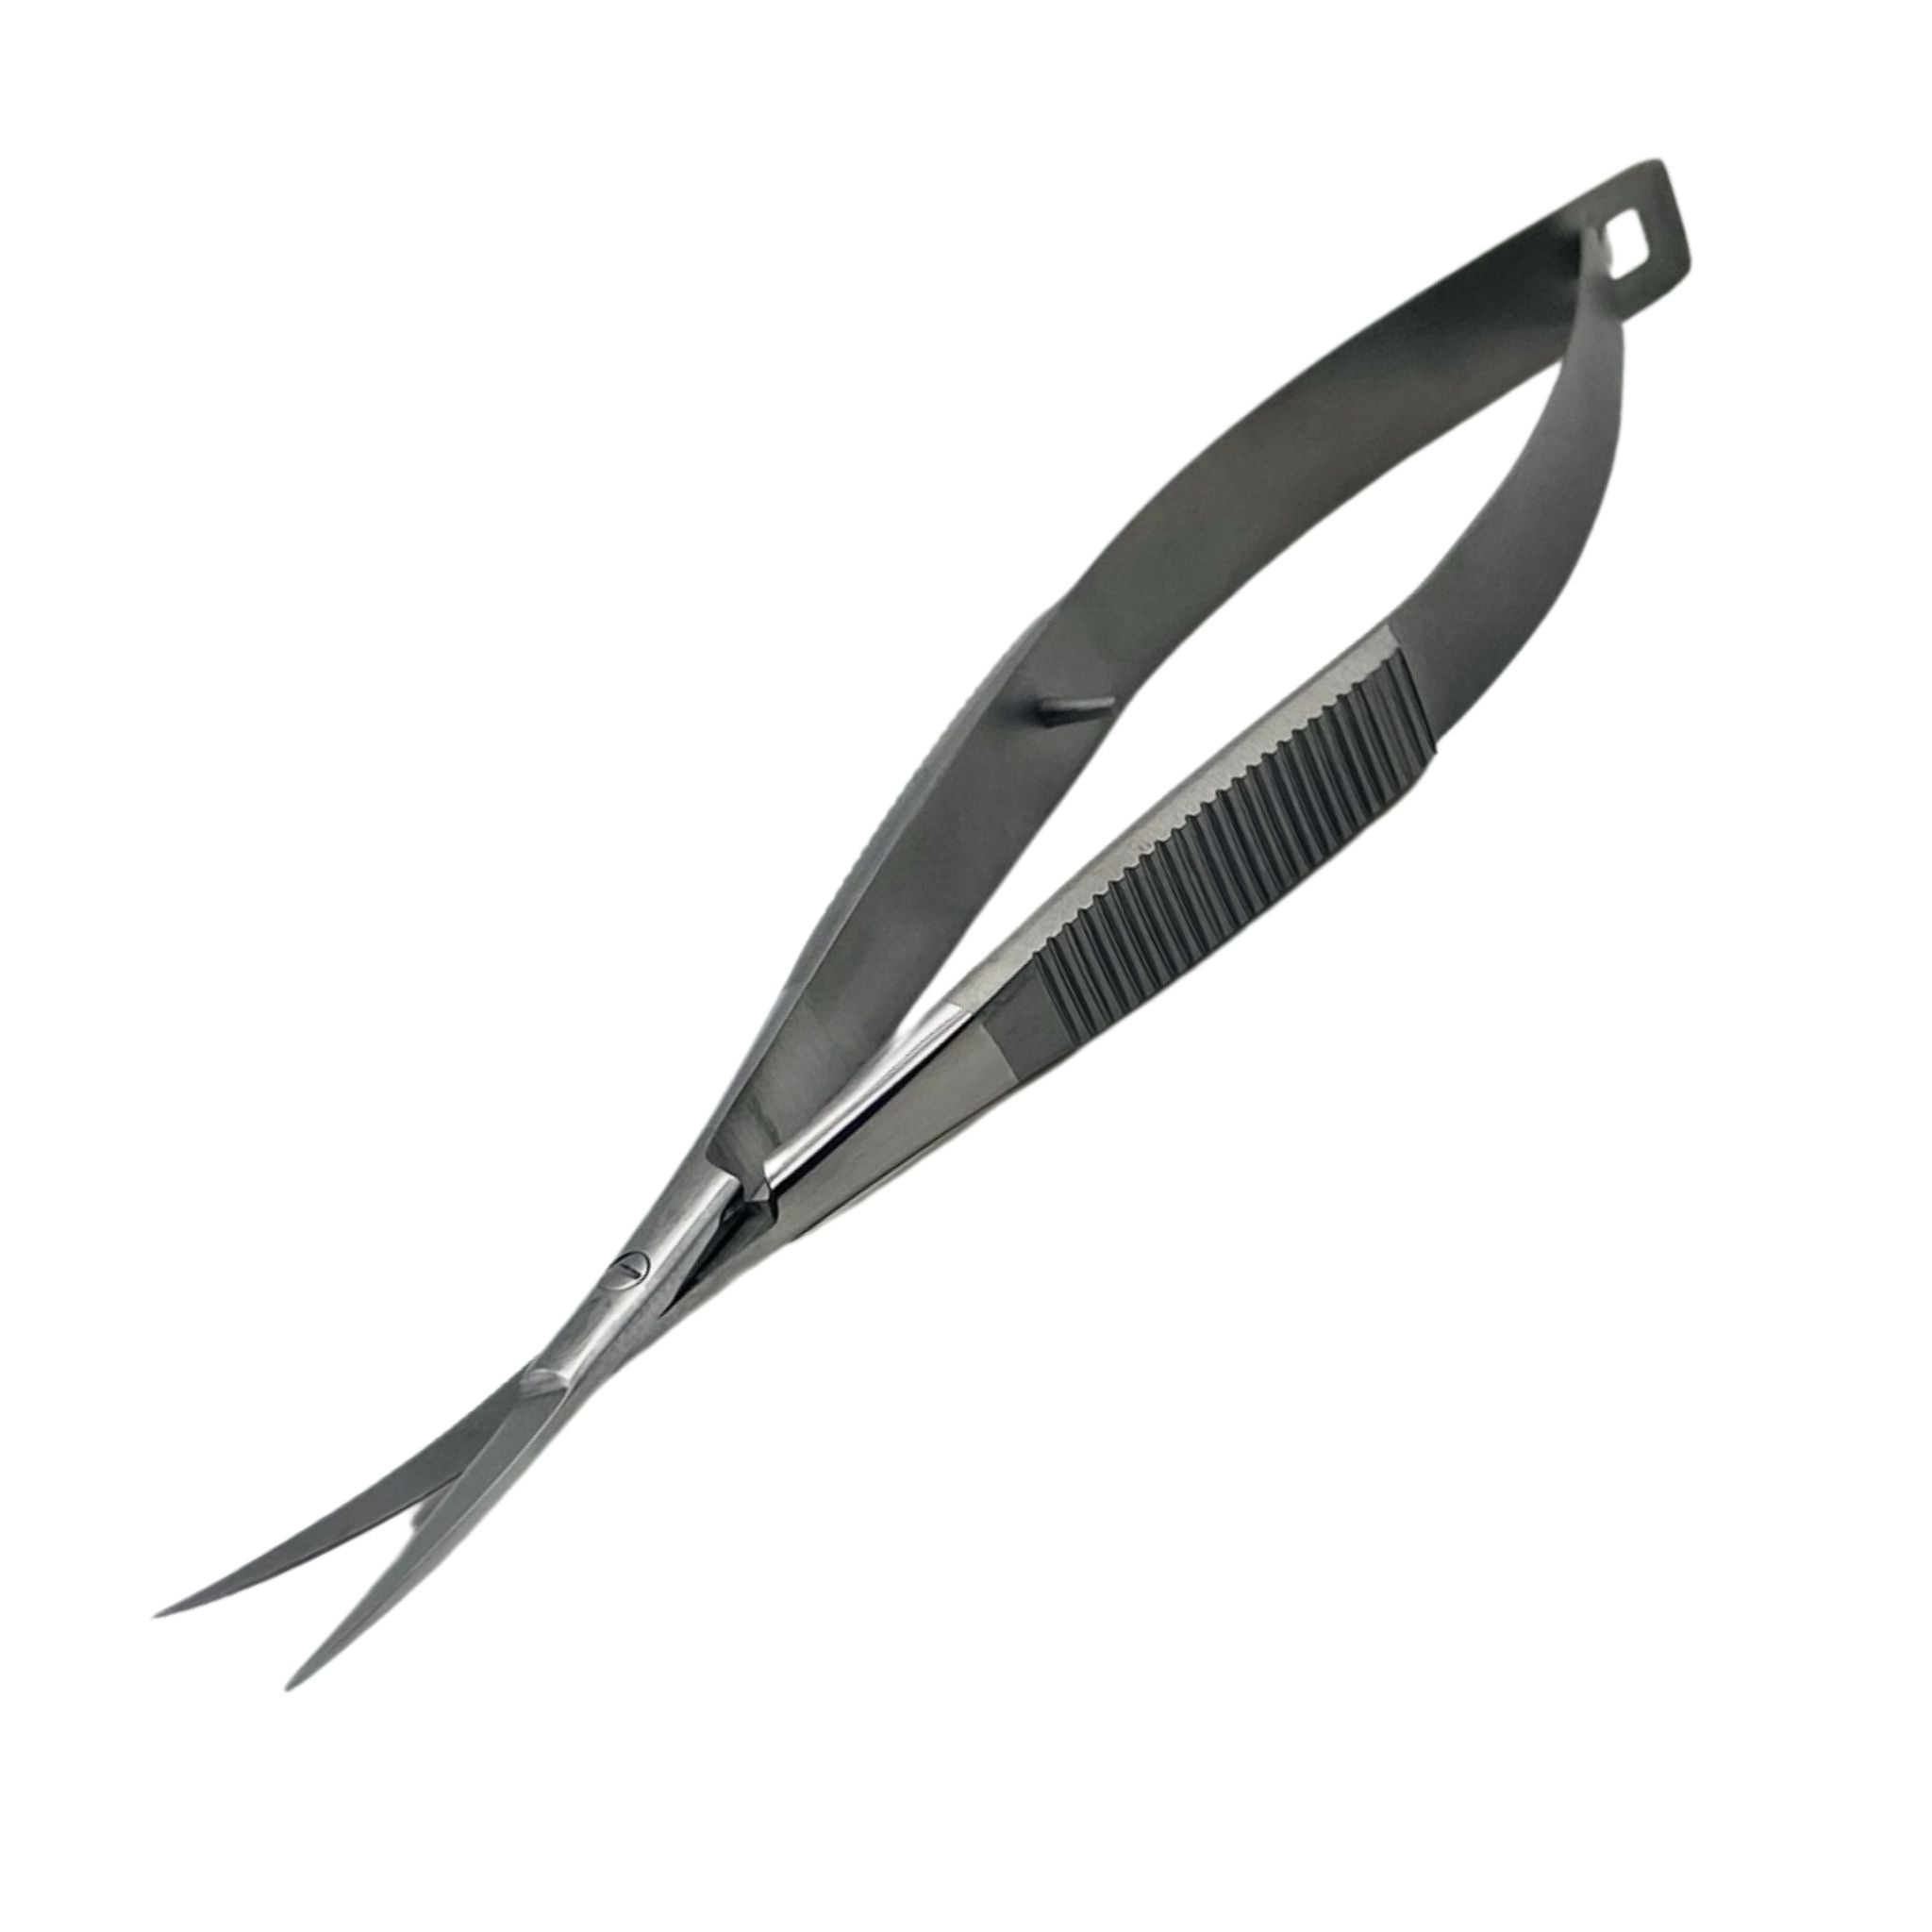 Spring Scissors - Cuticle & Eyebrow Spring Micro Scissors - Curved